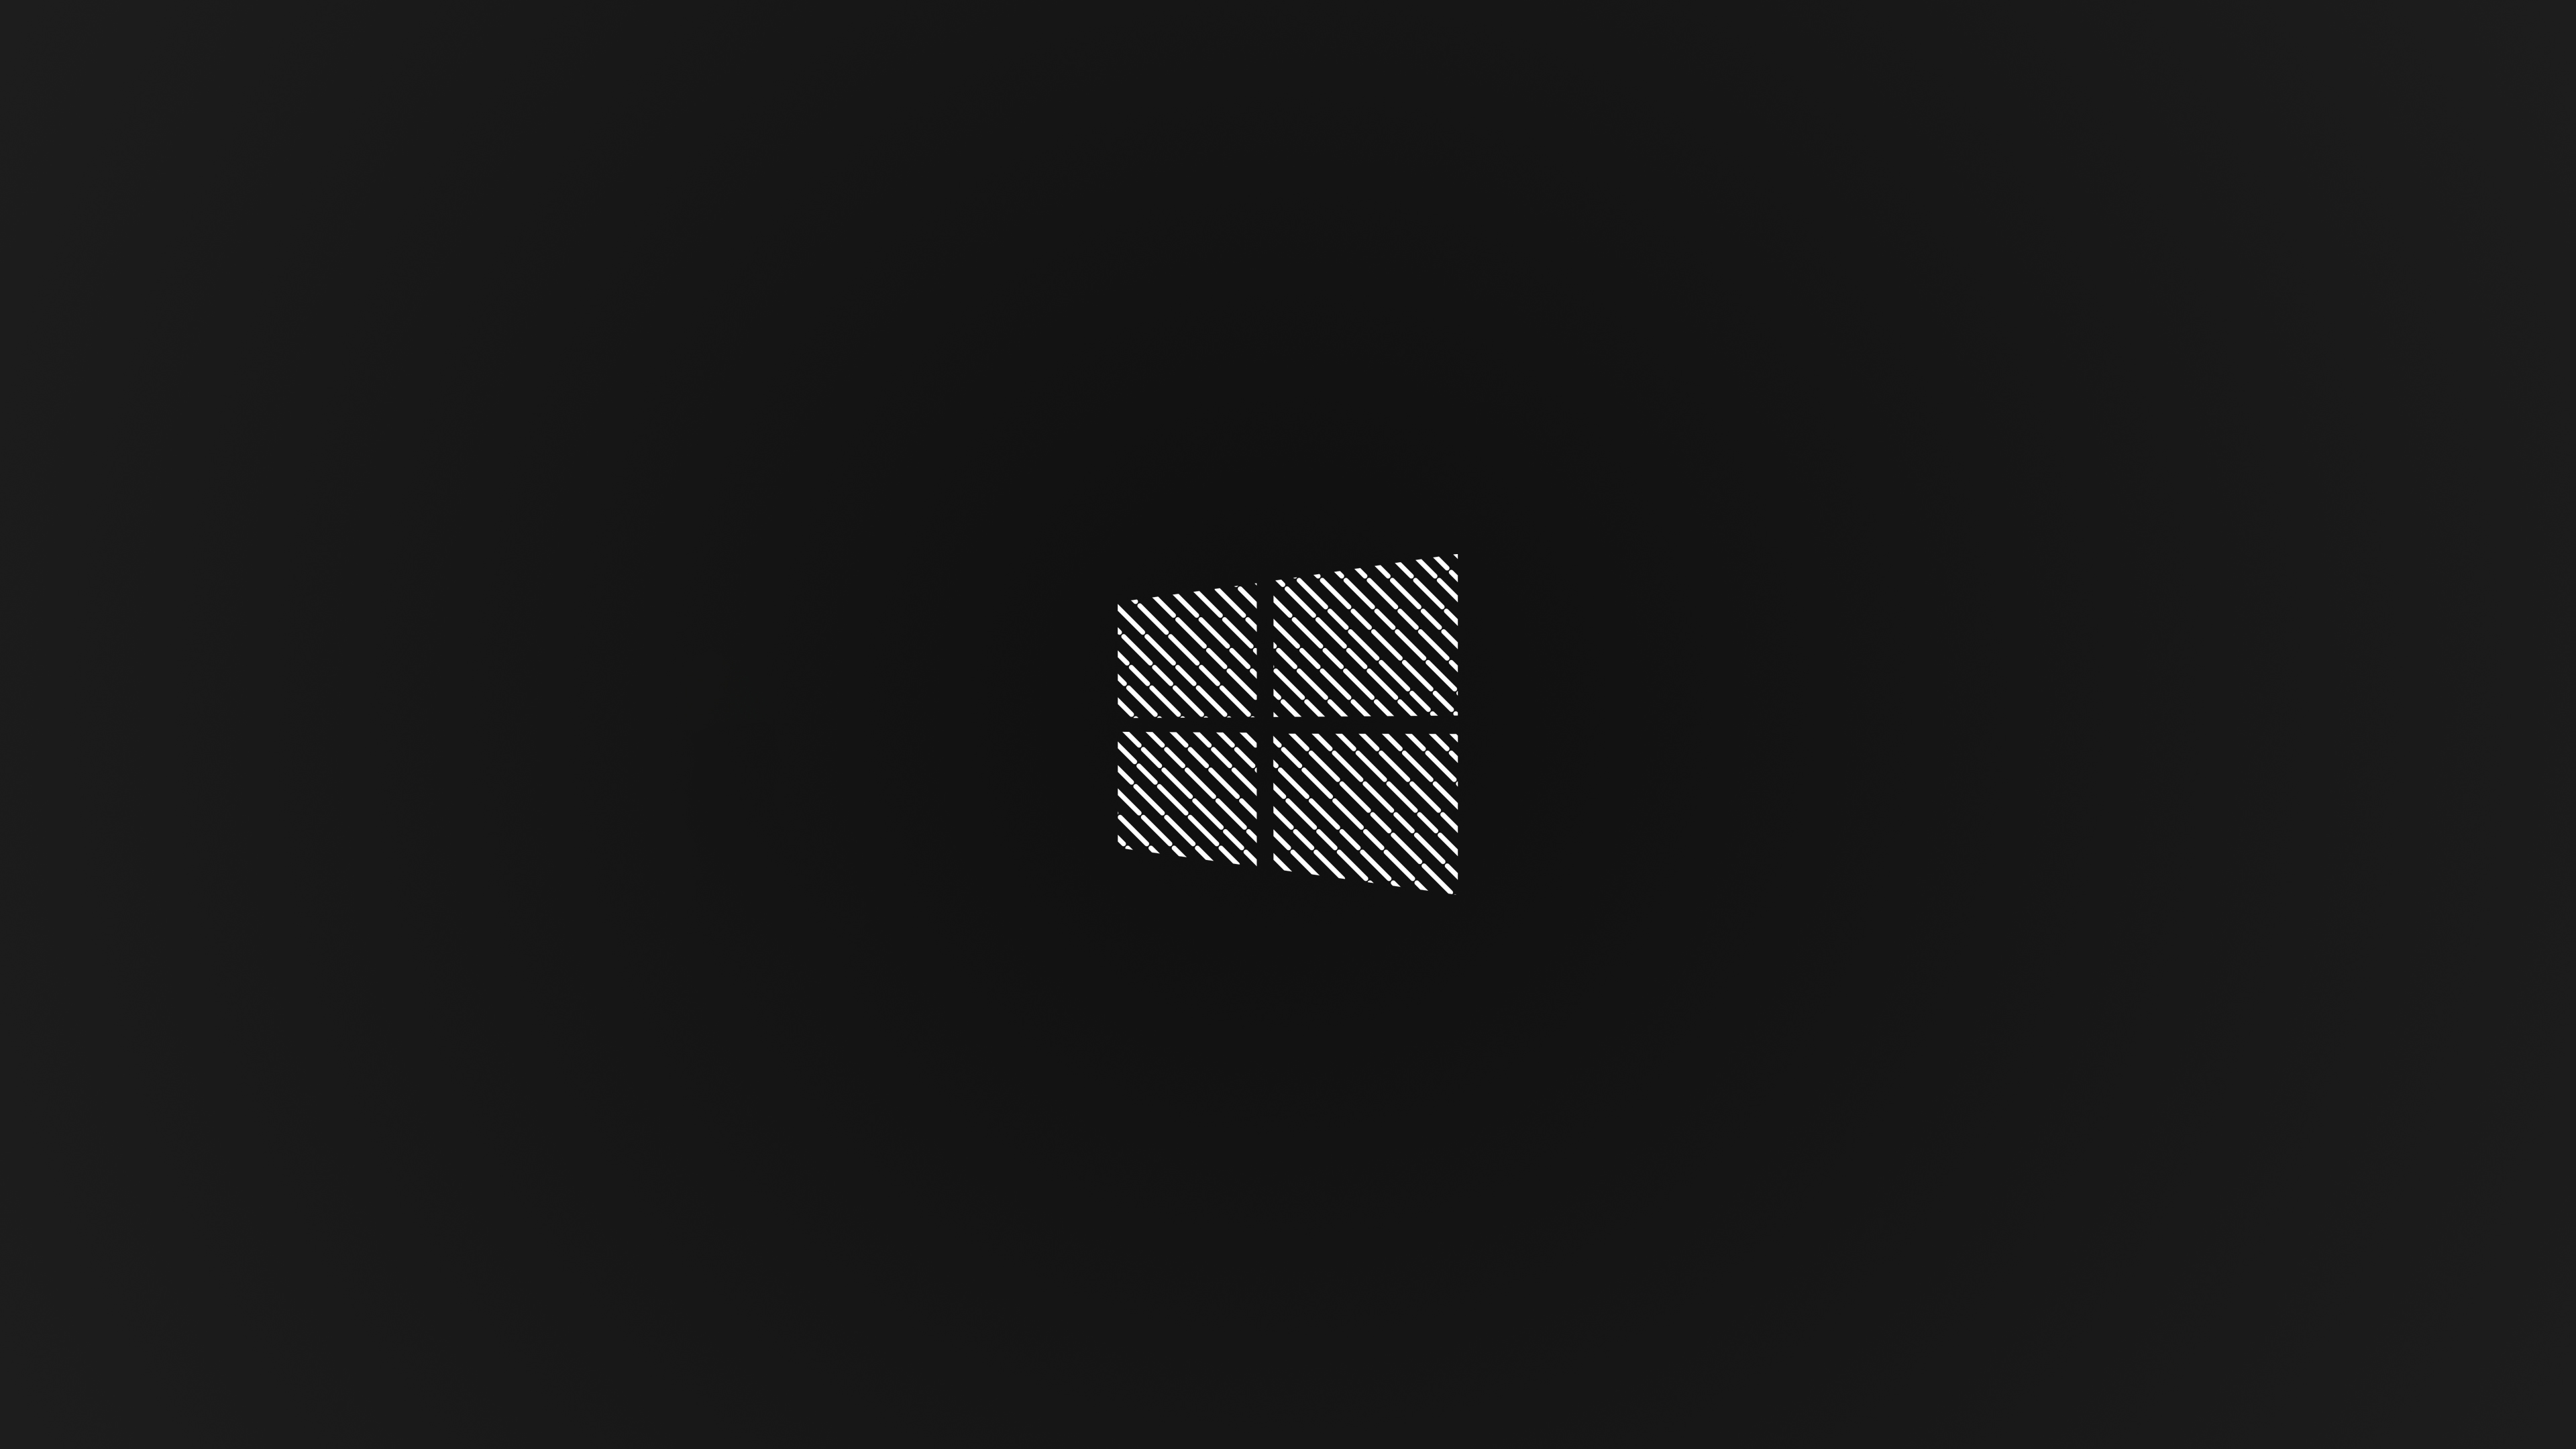 General 3840x2160 dark minimalism black background logo simple background operating system